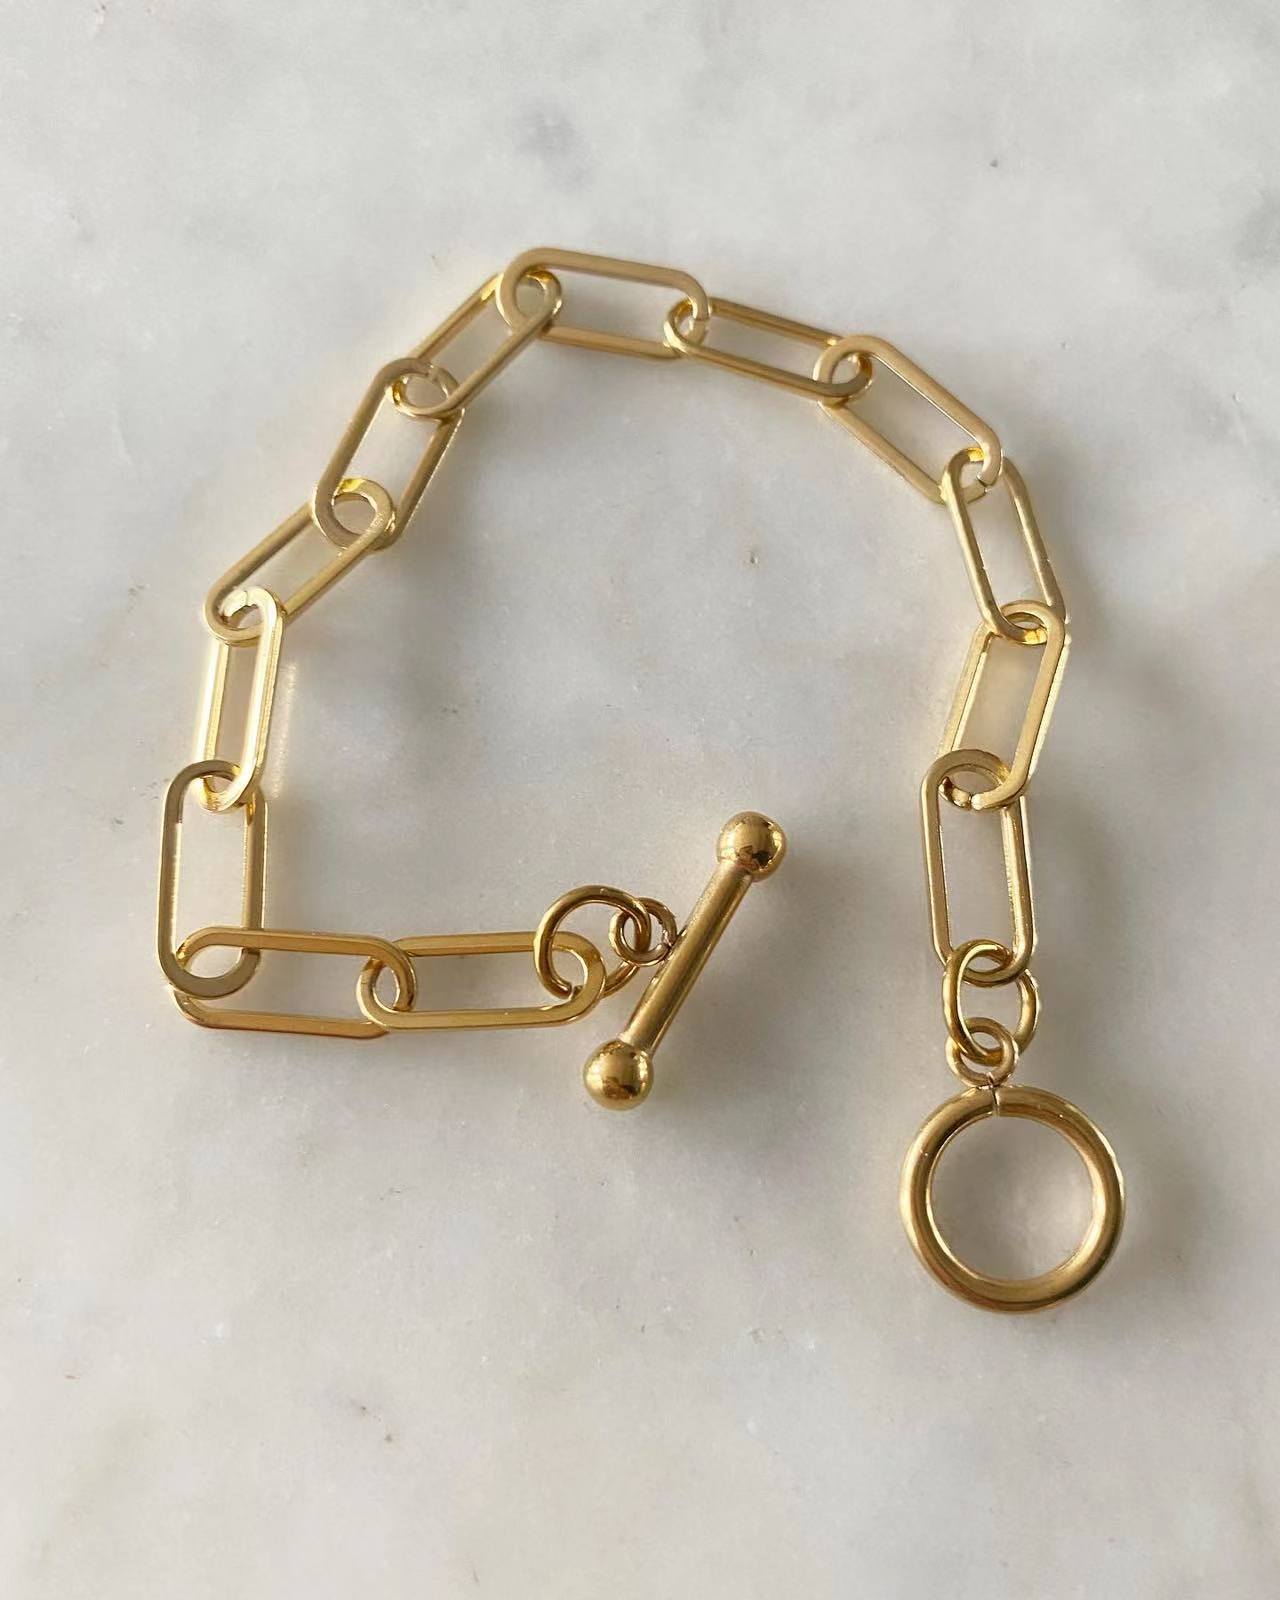 Shiloh Chain Bracelet